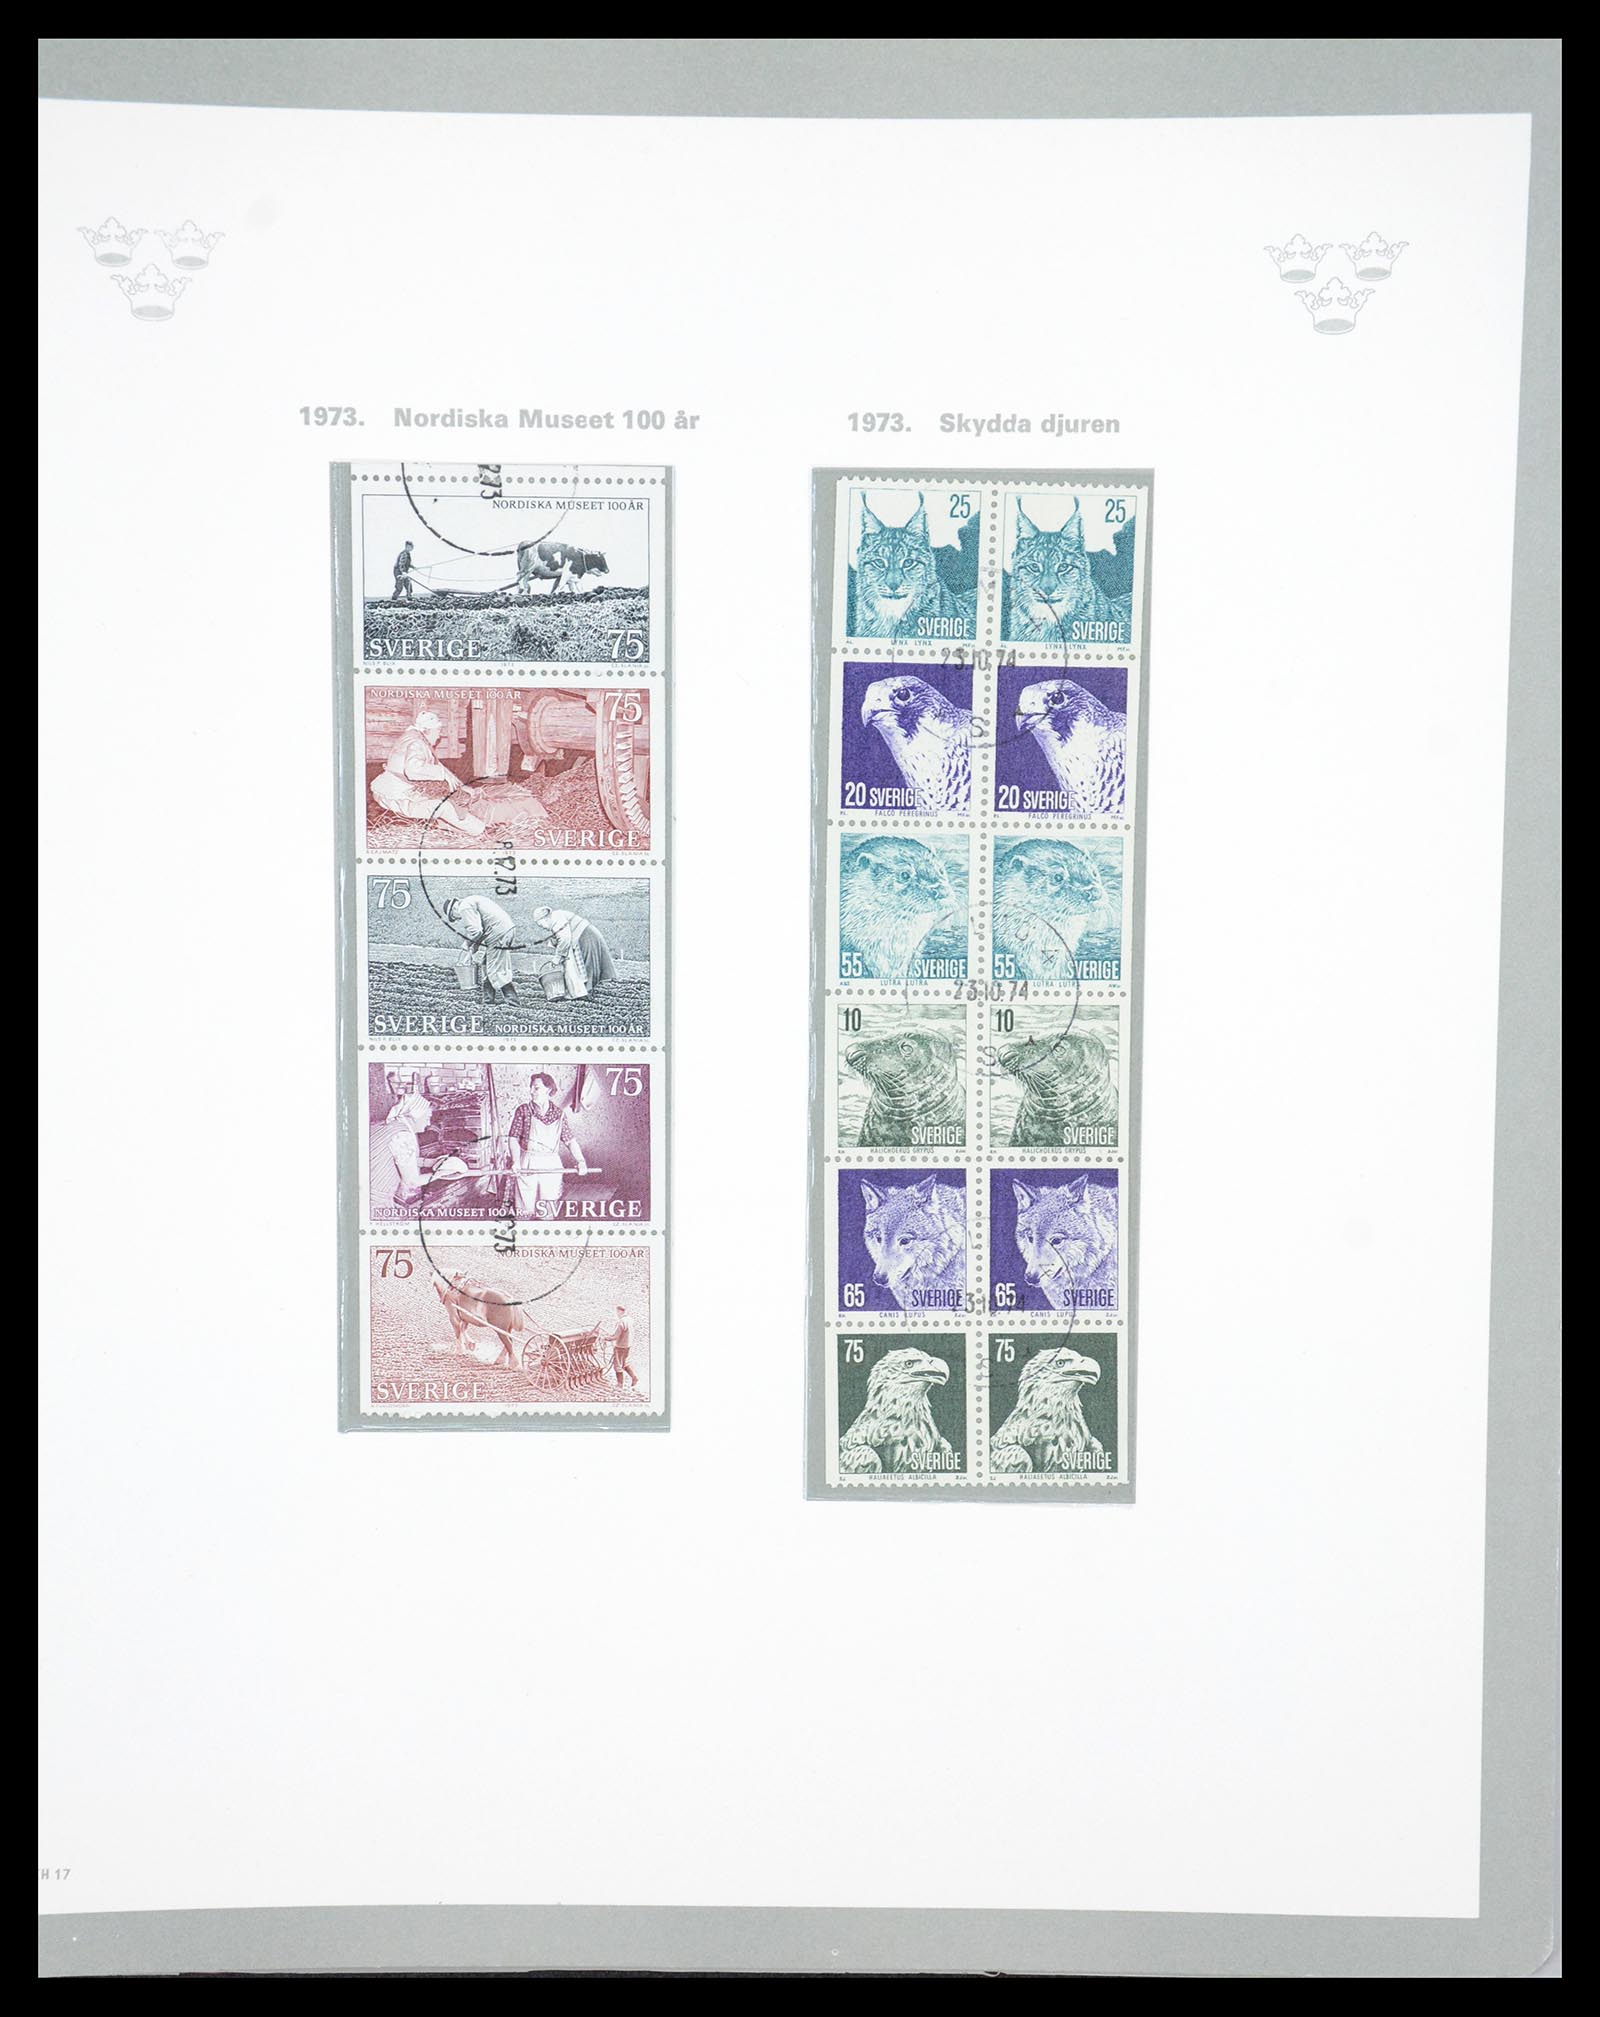 36579 129 - Stamp collection 36579 Zweden complete verzameling 1855-1975.